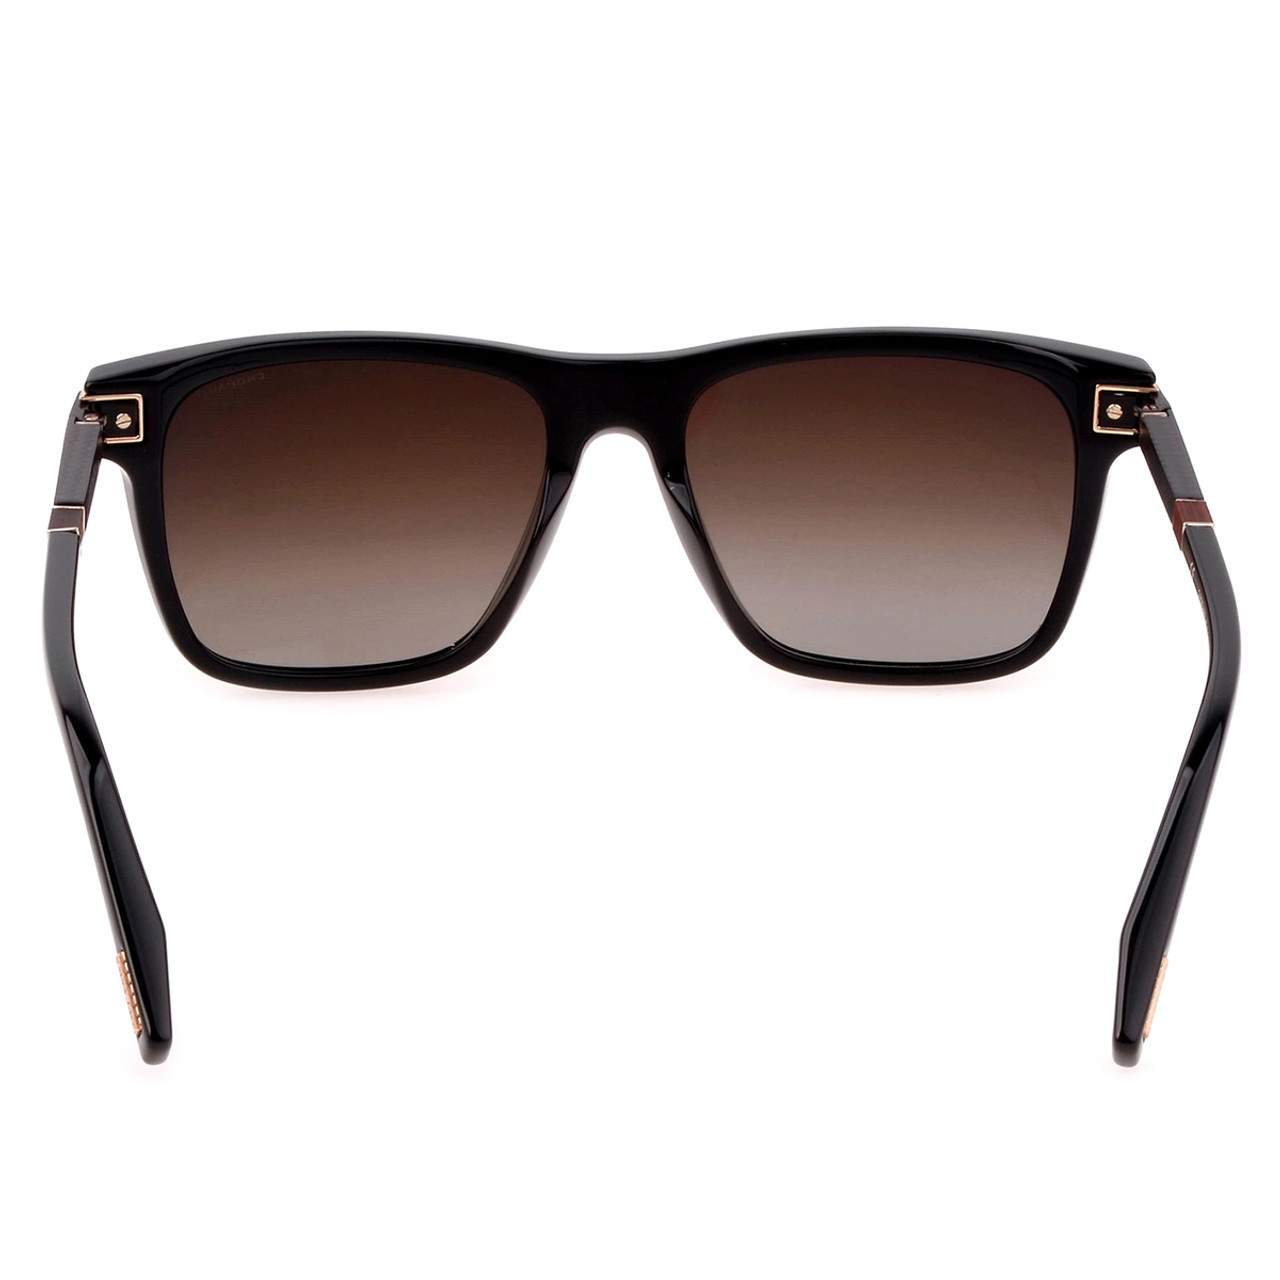 Top View of Chopard SCH312 Unisex Sunglasses Black Grey/Polarized Smoke Brown Gradient 53 mm